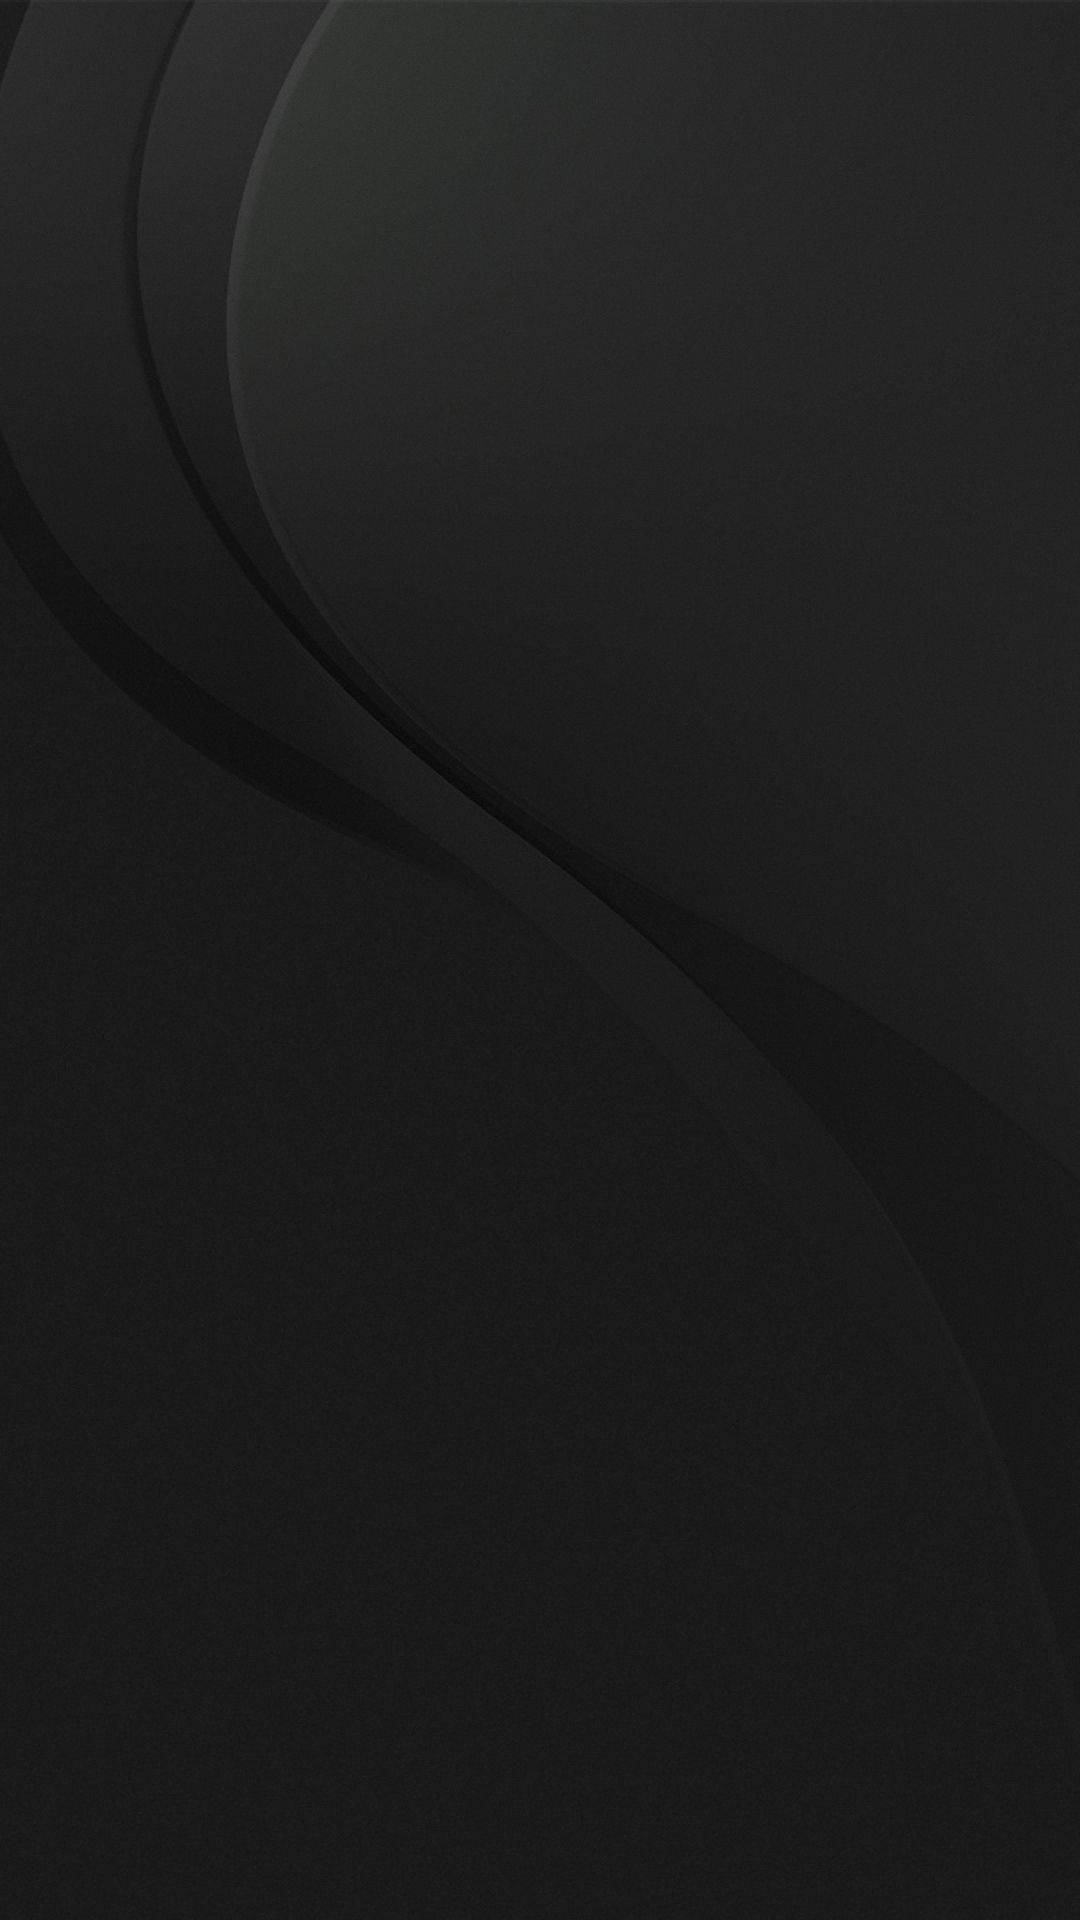 Wavy Pattern Black Leather Iphone Wallpaper